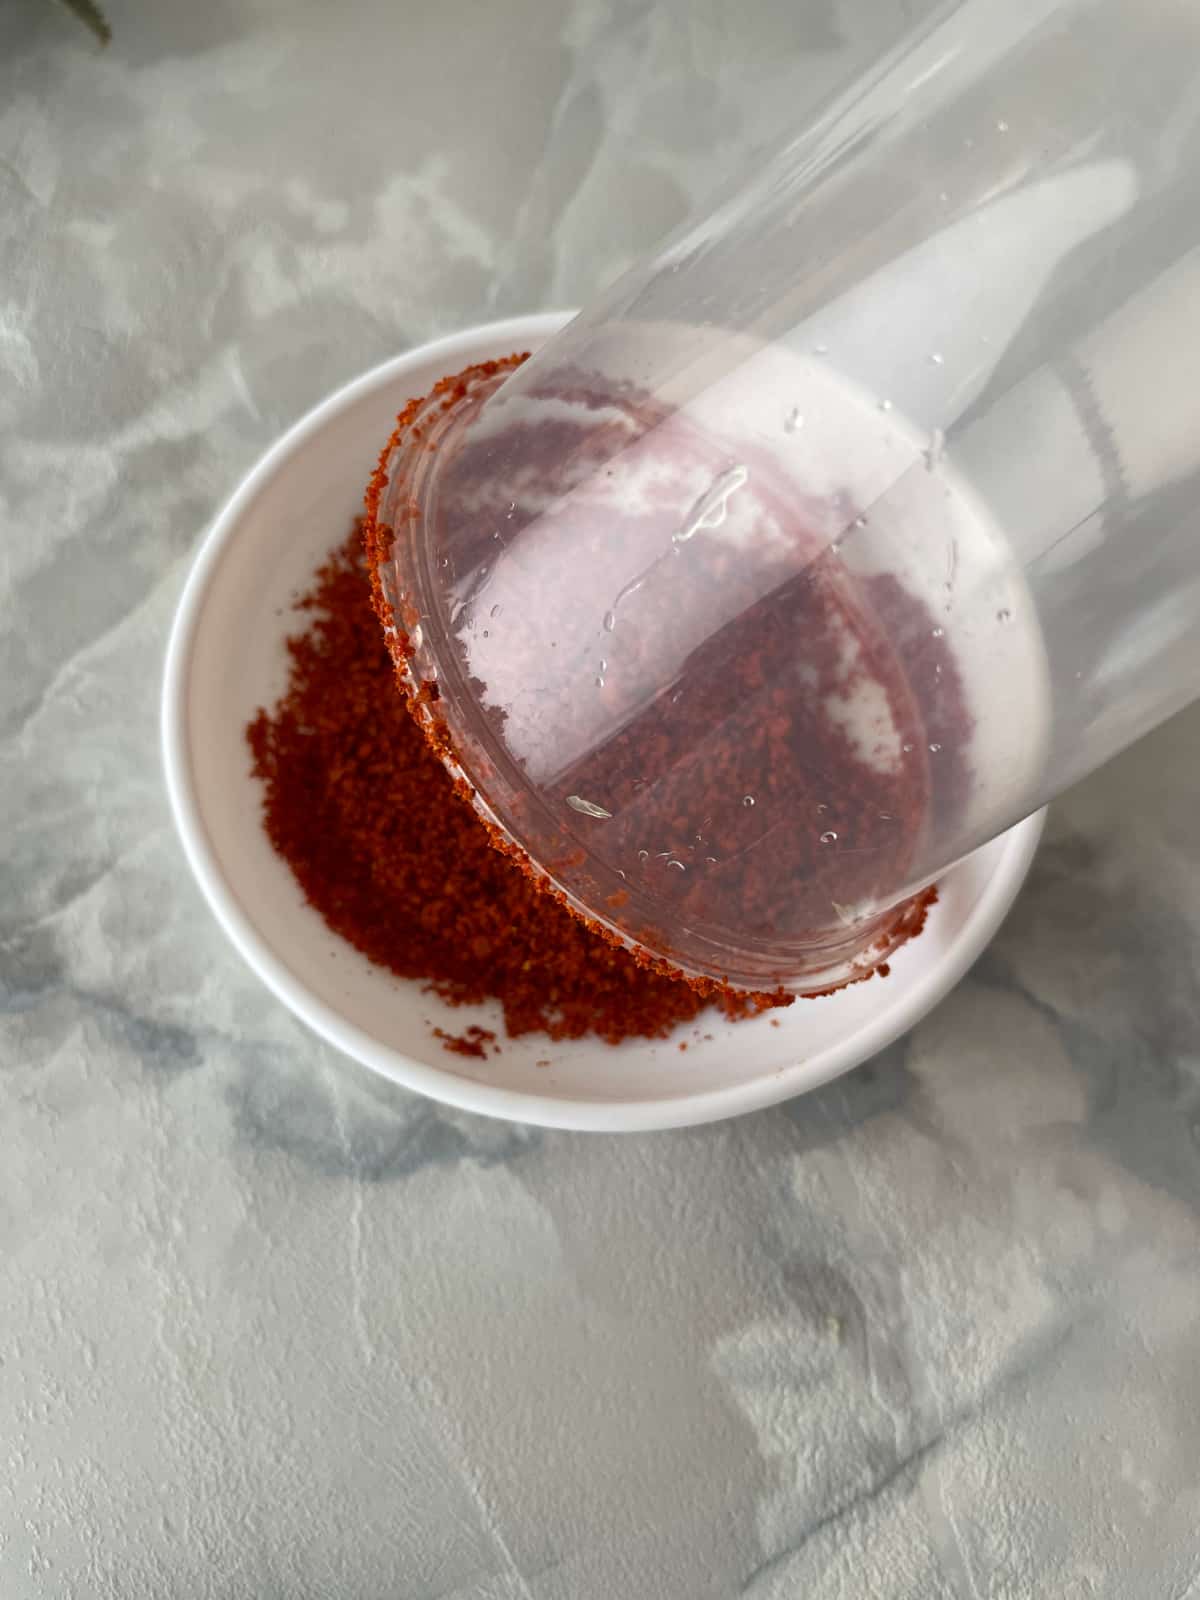 Rim of plastic clear cup being dipped in Tajin spice seasoning